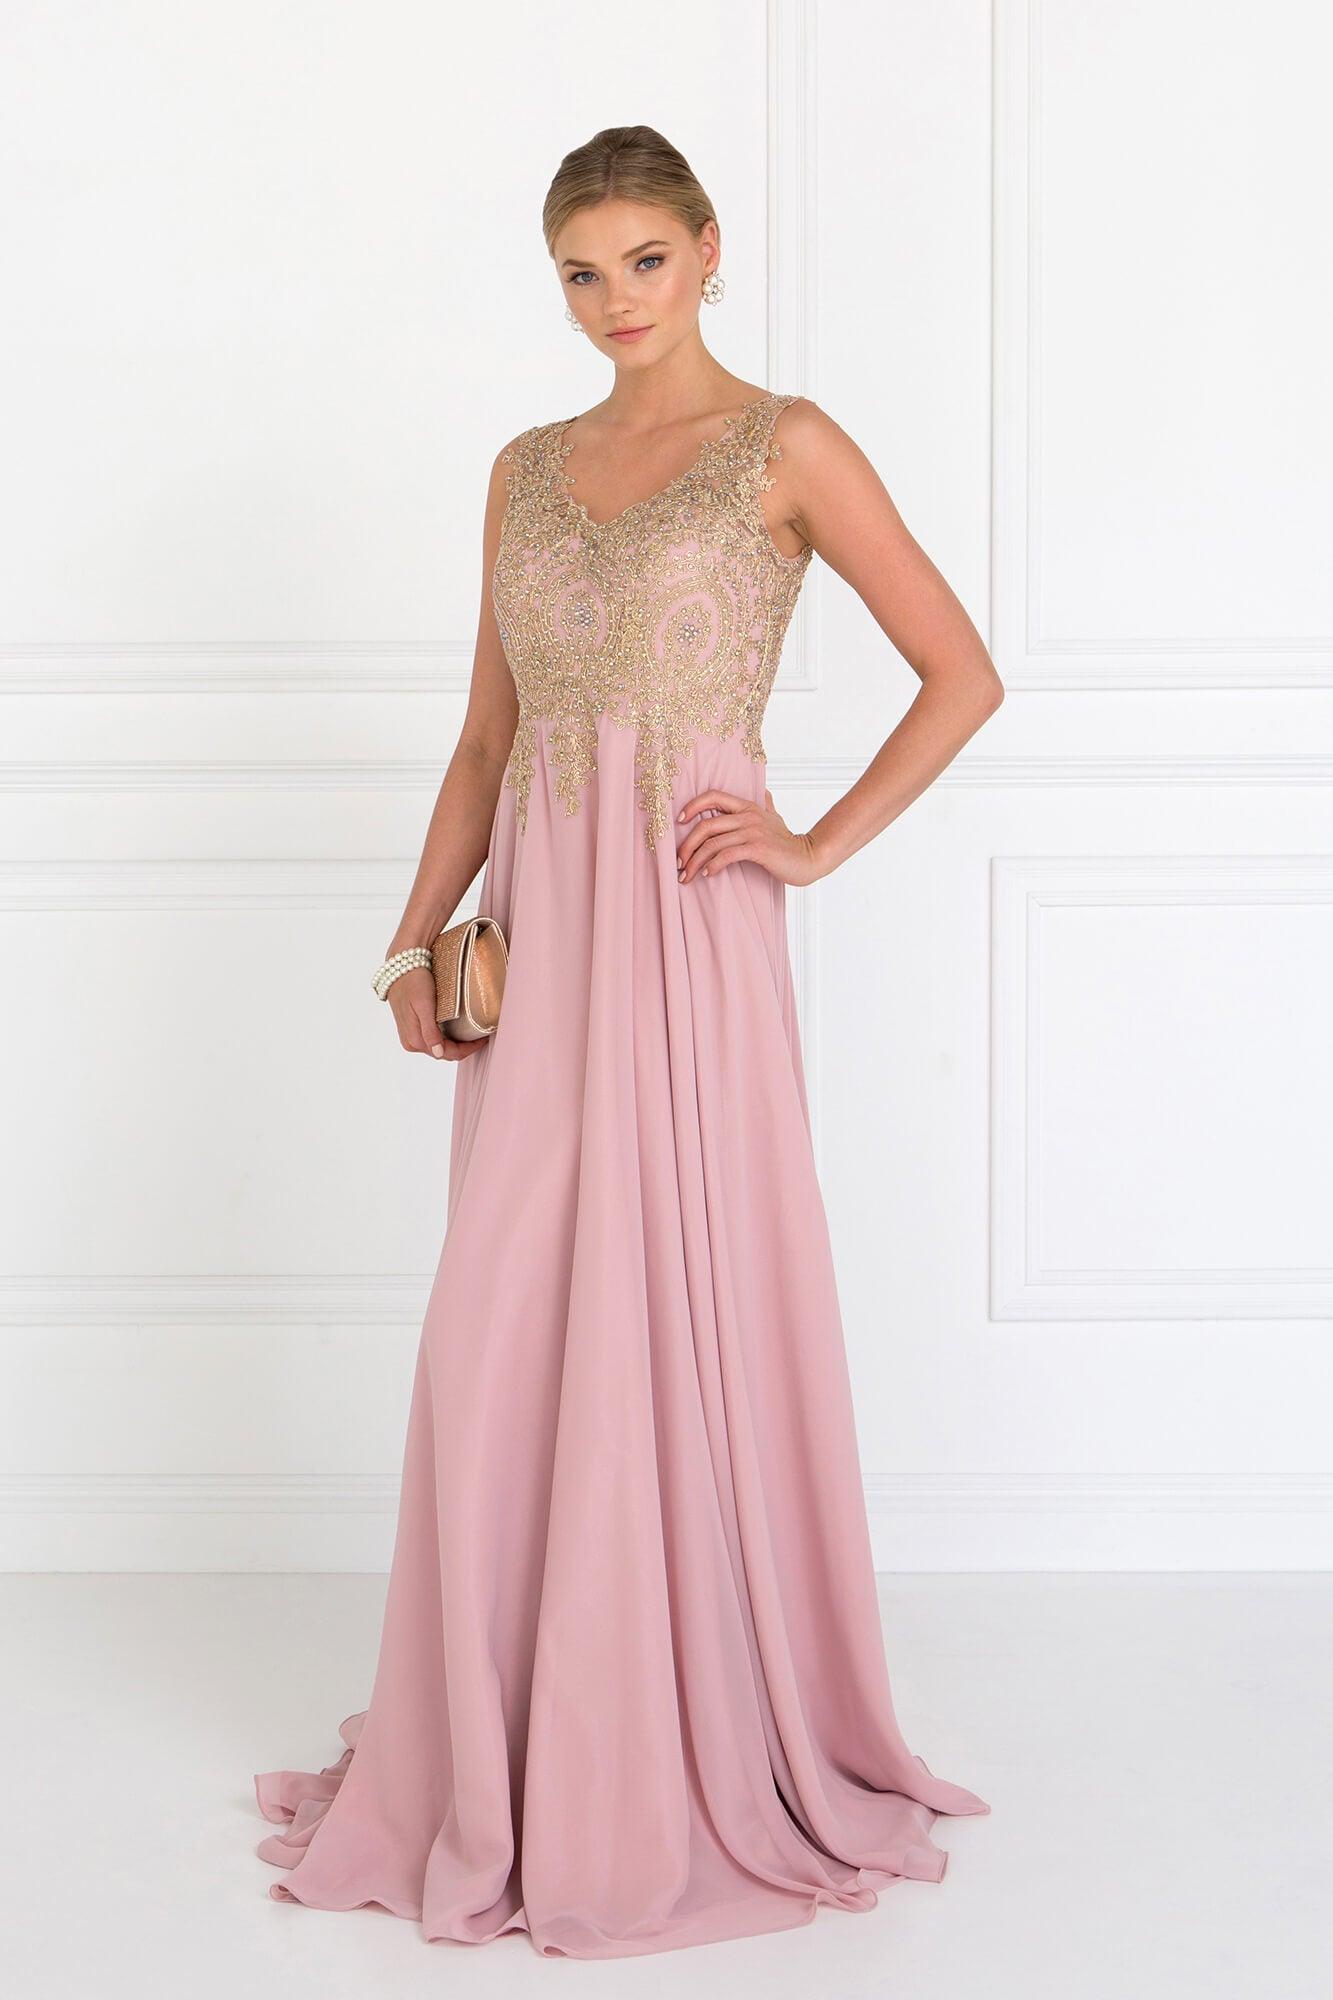 Embroidered Chiffon Long Prom Dress Formal - The Dress Outlet Elizabeth K